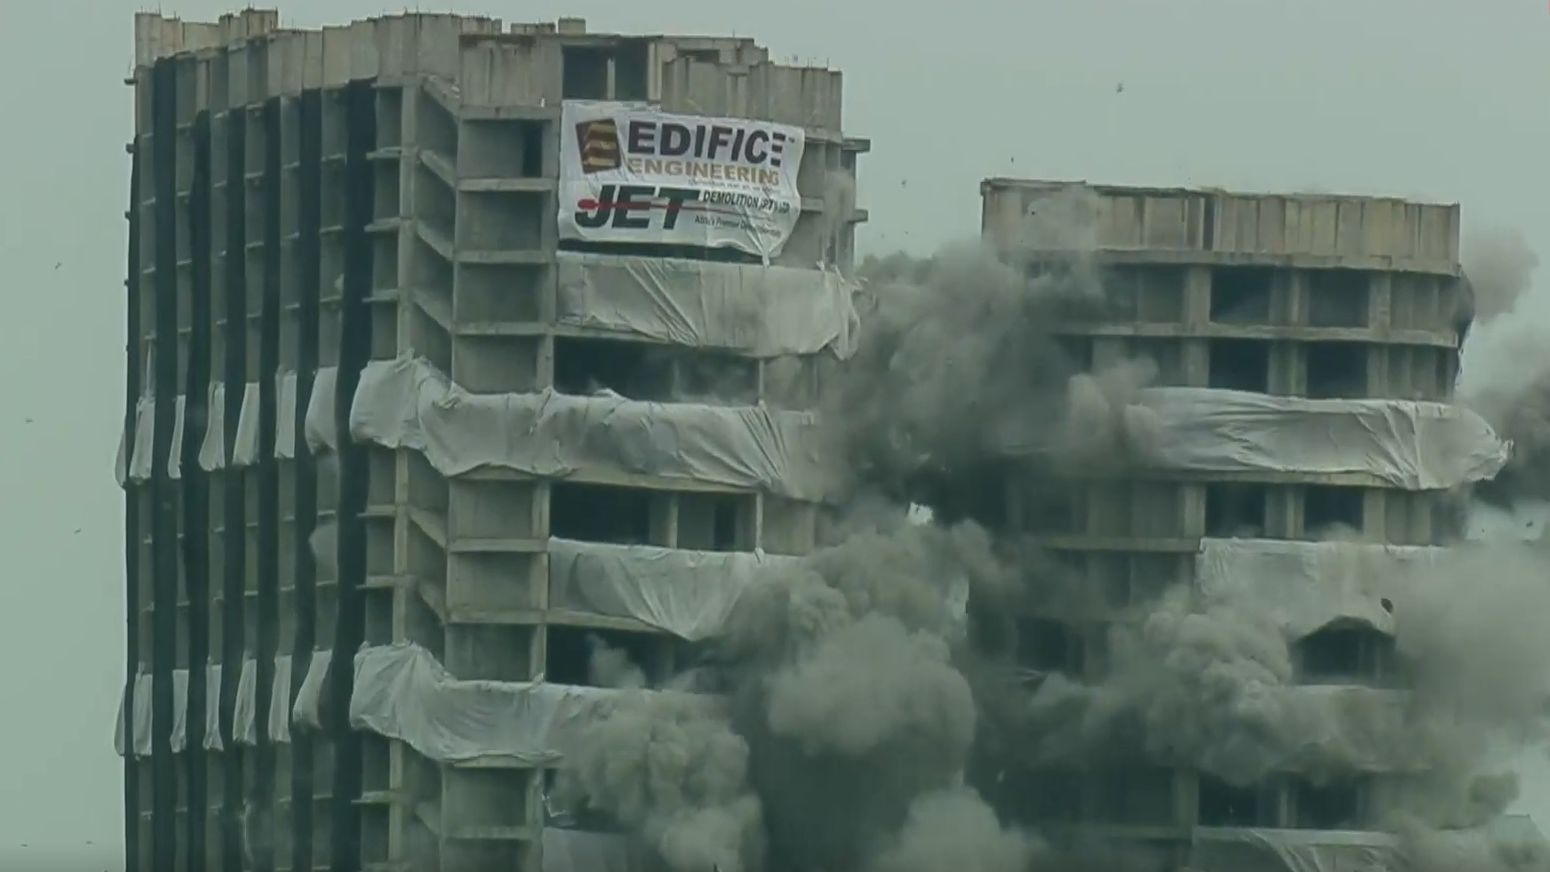 noida twin tower demolition evacuation preparation  - Satya Hindi